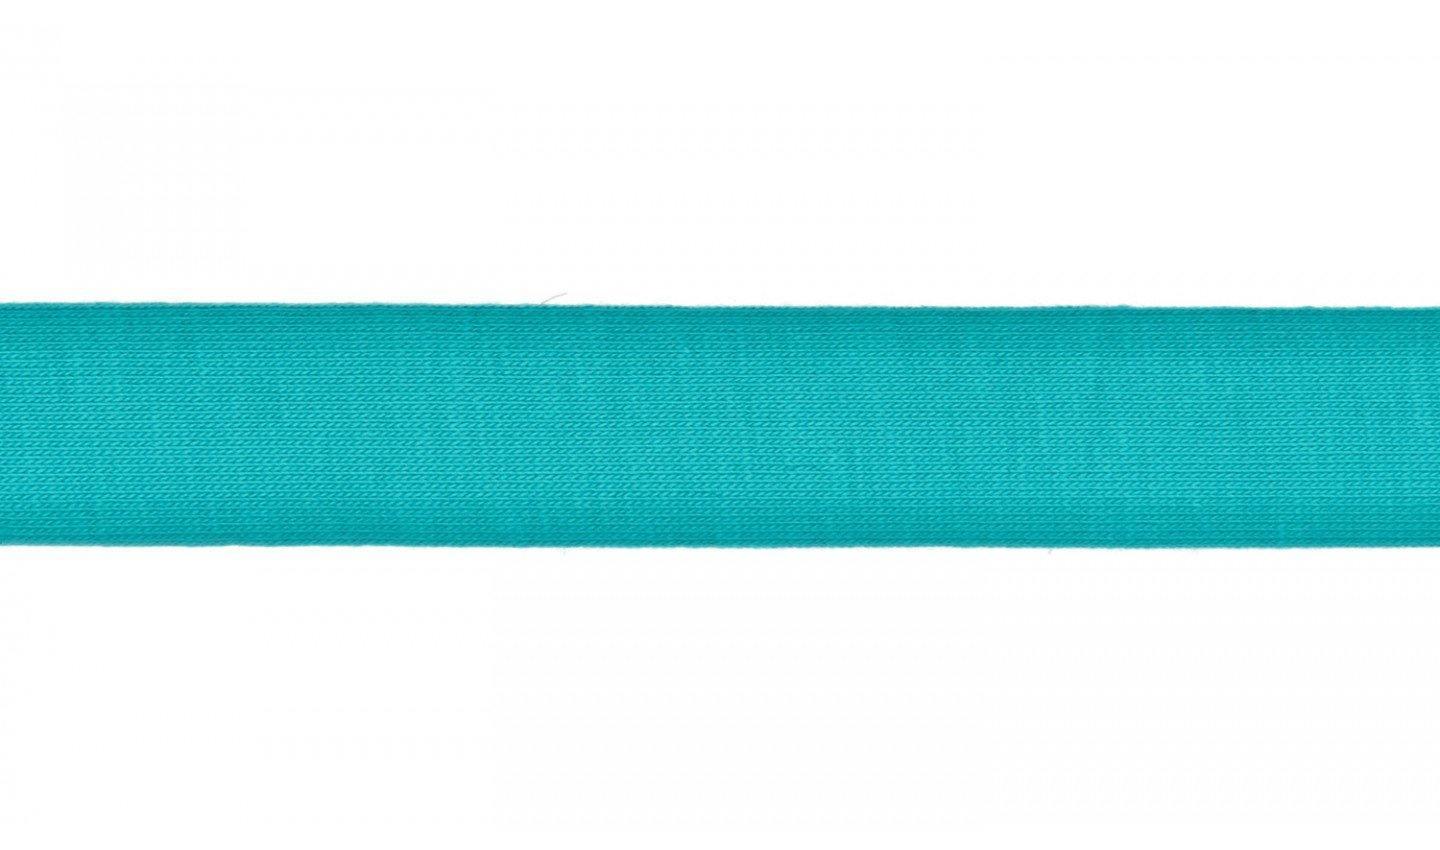 Stretch Bias Binding Tape - Turquoise-Bias Binding-Jelly Fabrics